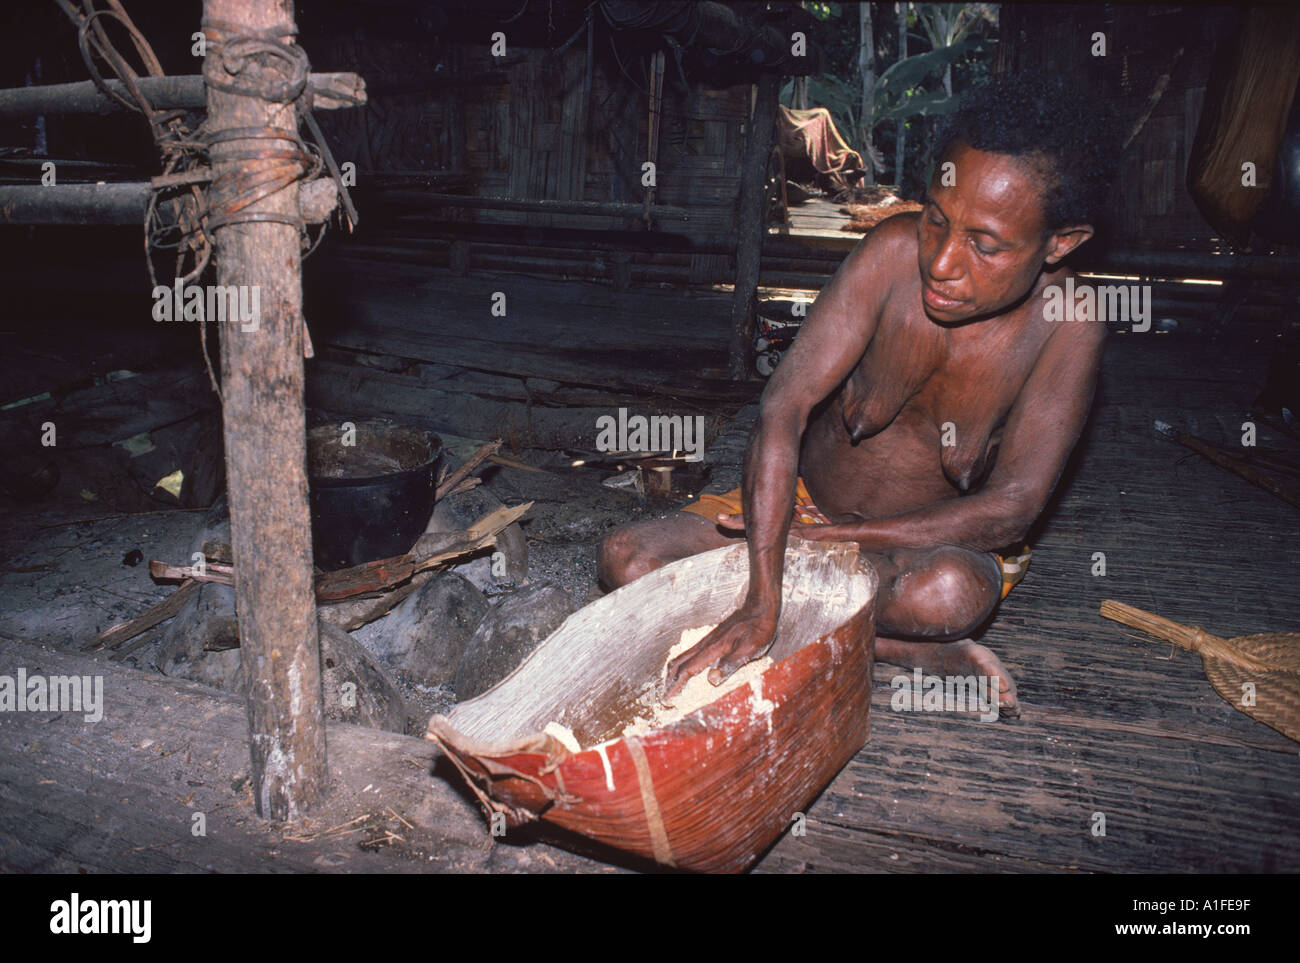 Portrait of a woman of the Iatmul tribe making sago at Ramu Papua New Guinea Pacific Islands M Mackenzie Stock Photo